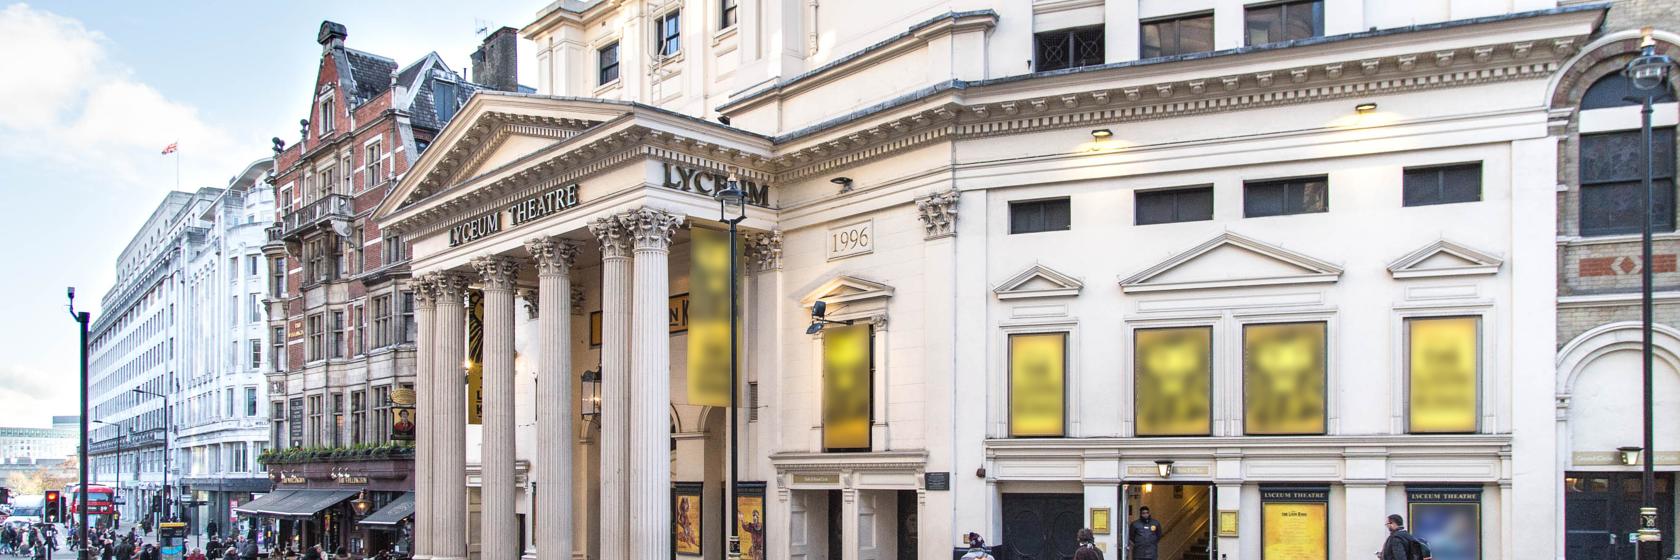 Lyceum Theatre, London Hotels